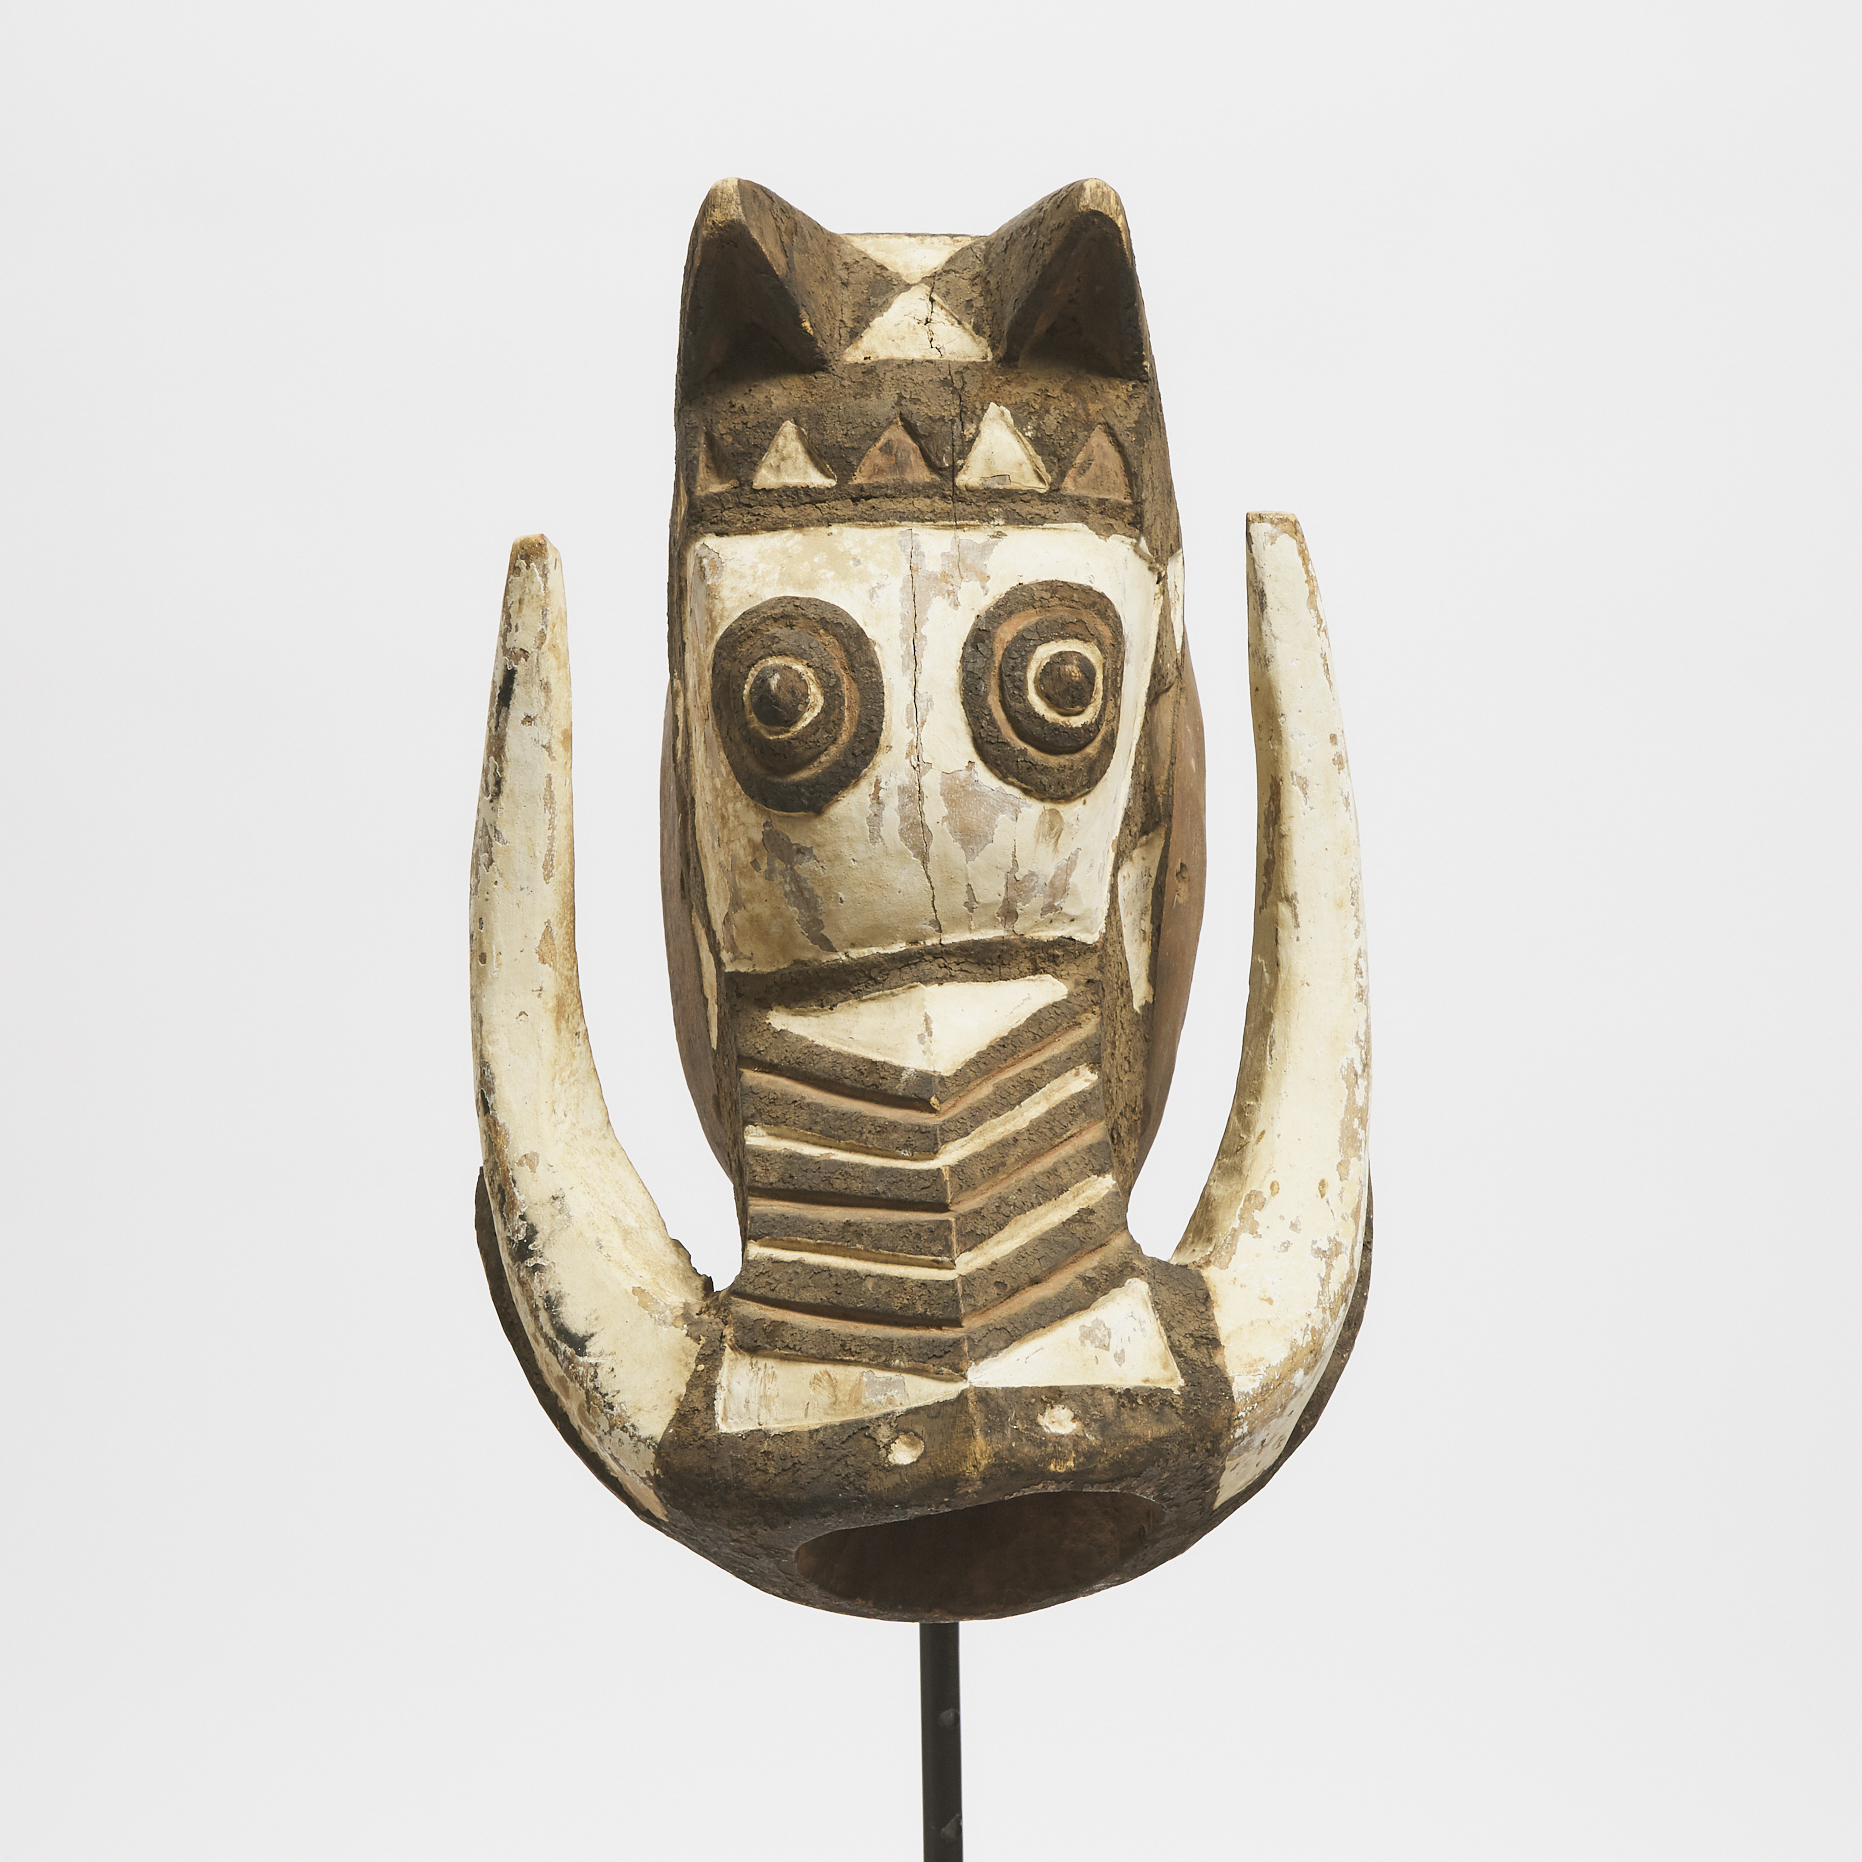 Bobo Bwa Warthog Mask, Burkina Faso, West Africa, late 20th century